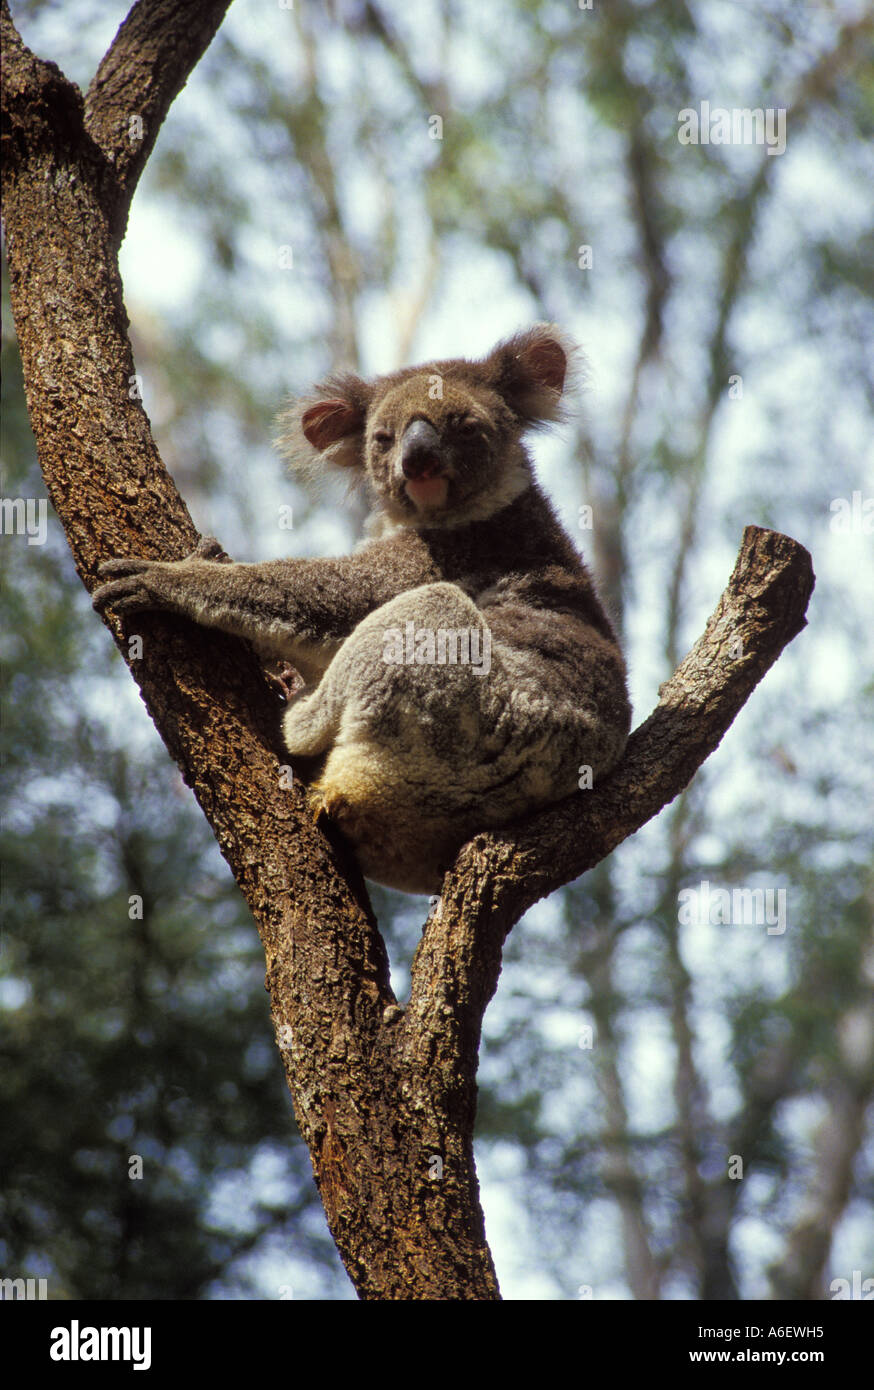 Australian Koala recare in una struttura ad albero Foto Stock